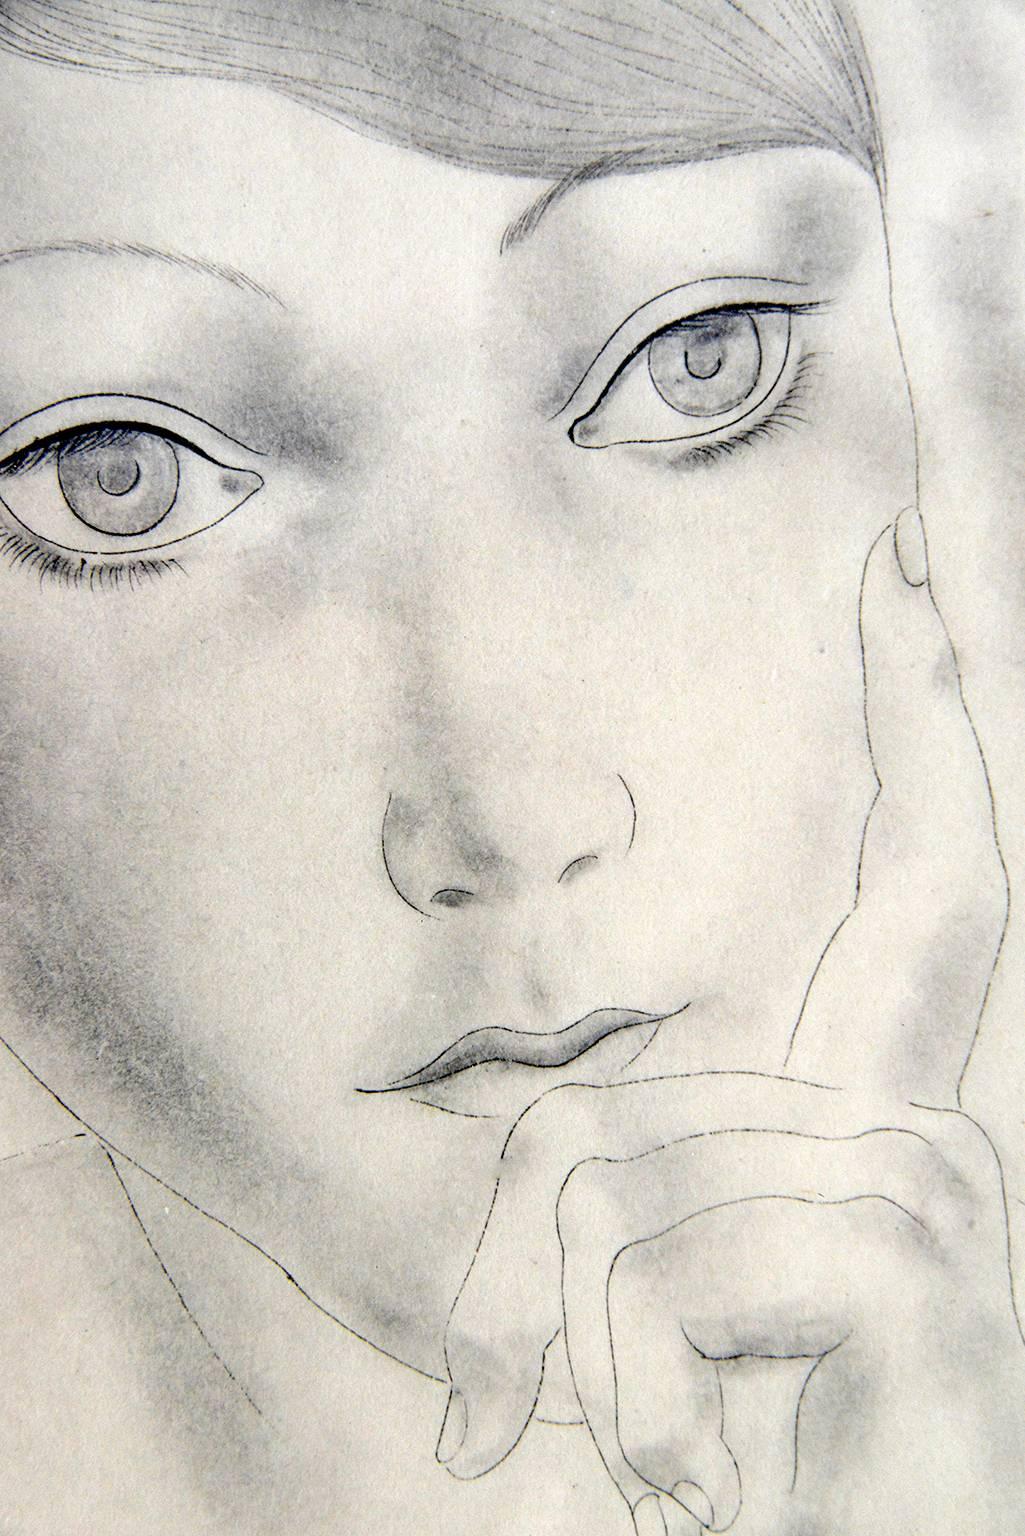  Head of a Young Girl lost in thought - Kiki de Montparnasse - Art by Leonard Tsuguharu Foujita